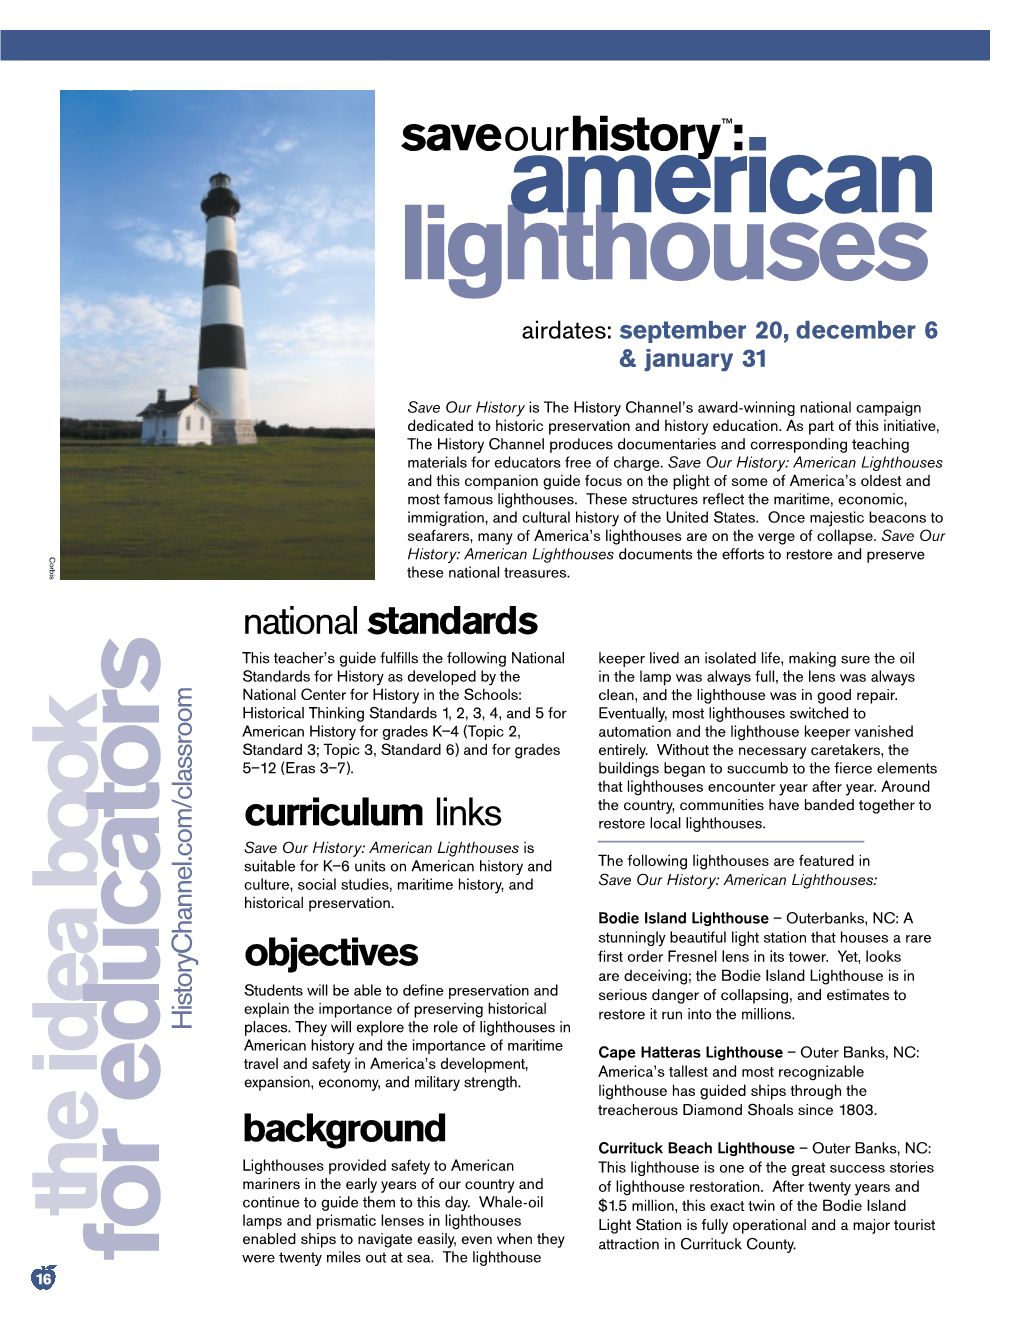 Americanhistory : Lighthouses Airdates: September 20, December 6 & January 31